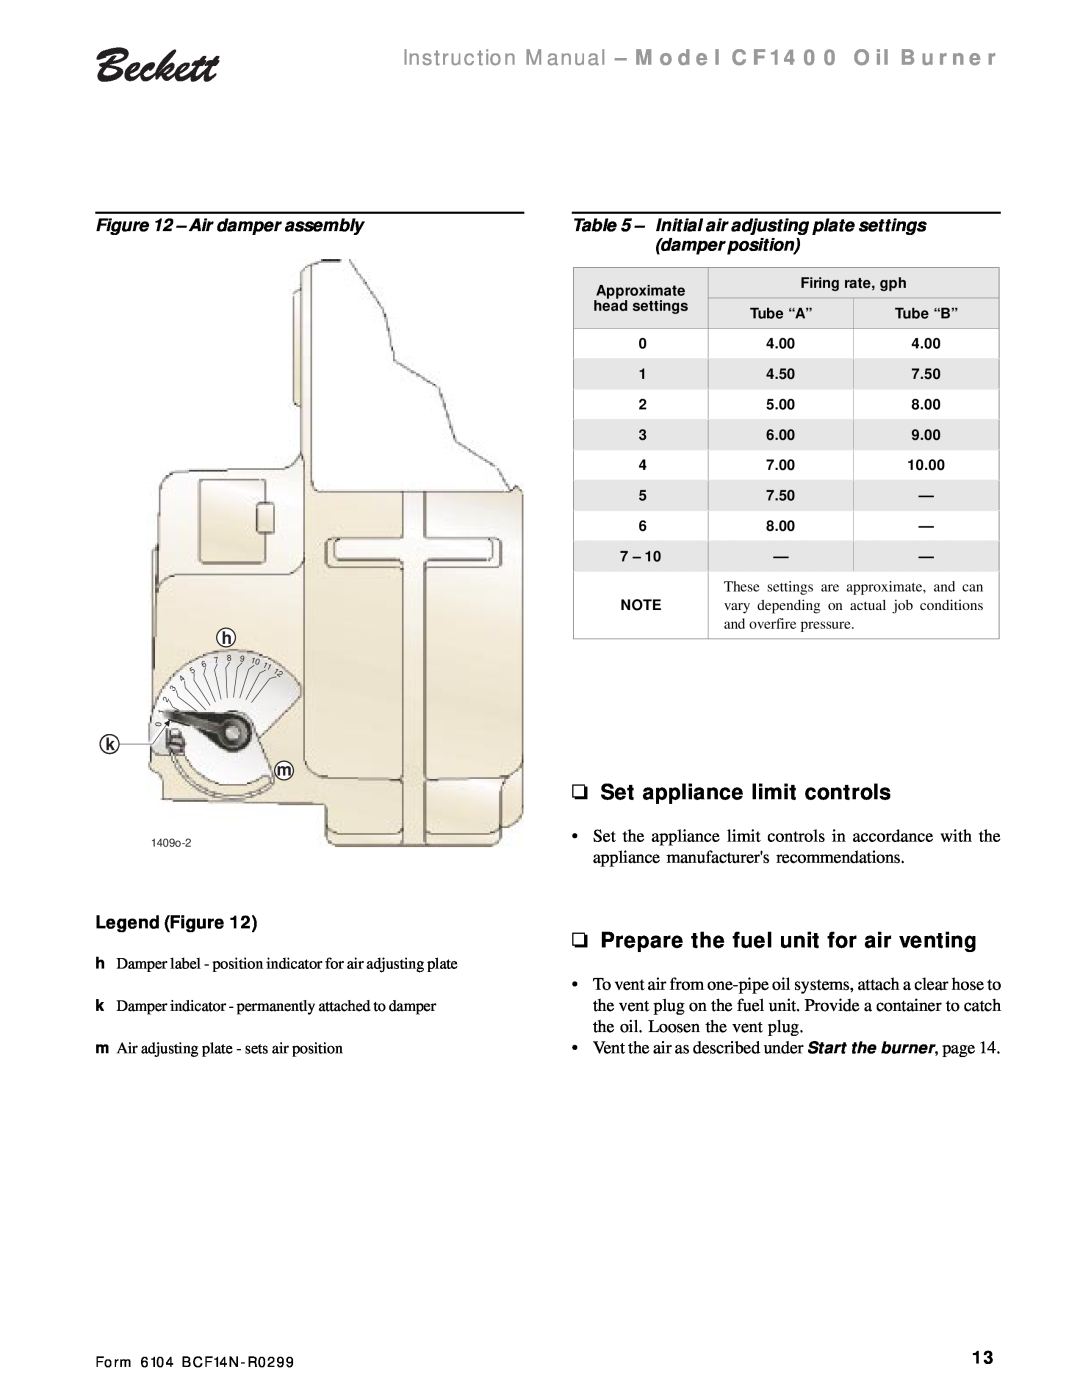 Beckett CF 1400 Set appliance limit controls, Prepare the fuel unit for air venting, Air damper assembly, Legend Figure 